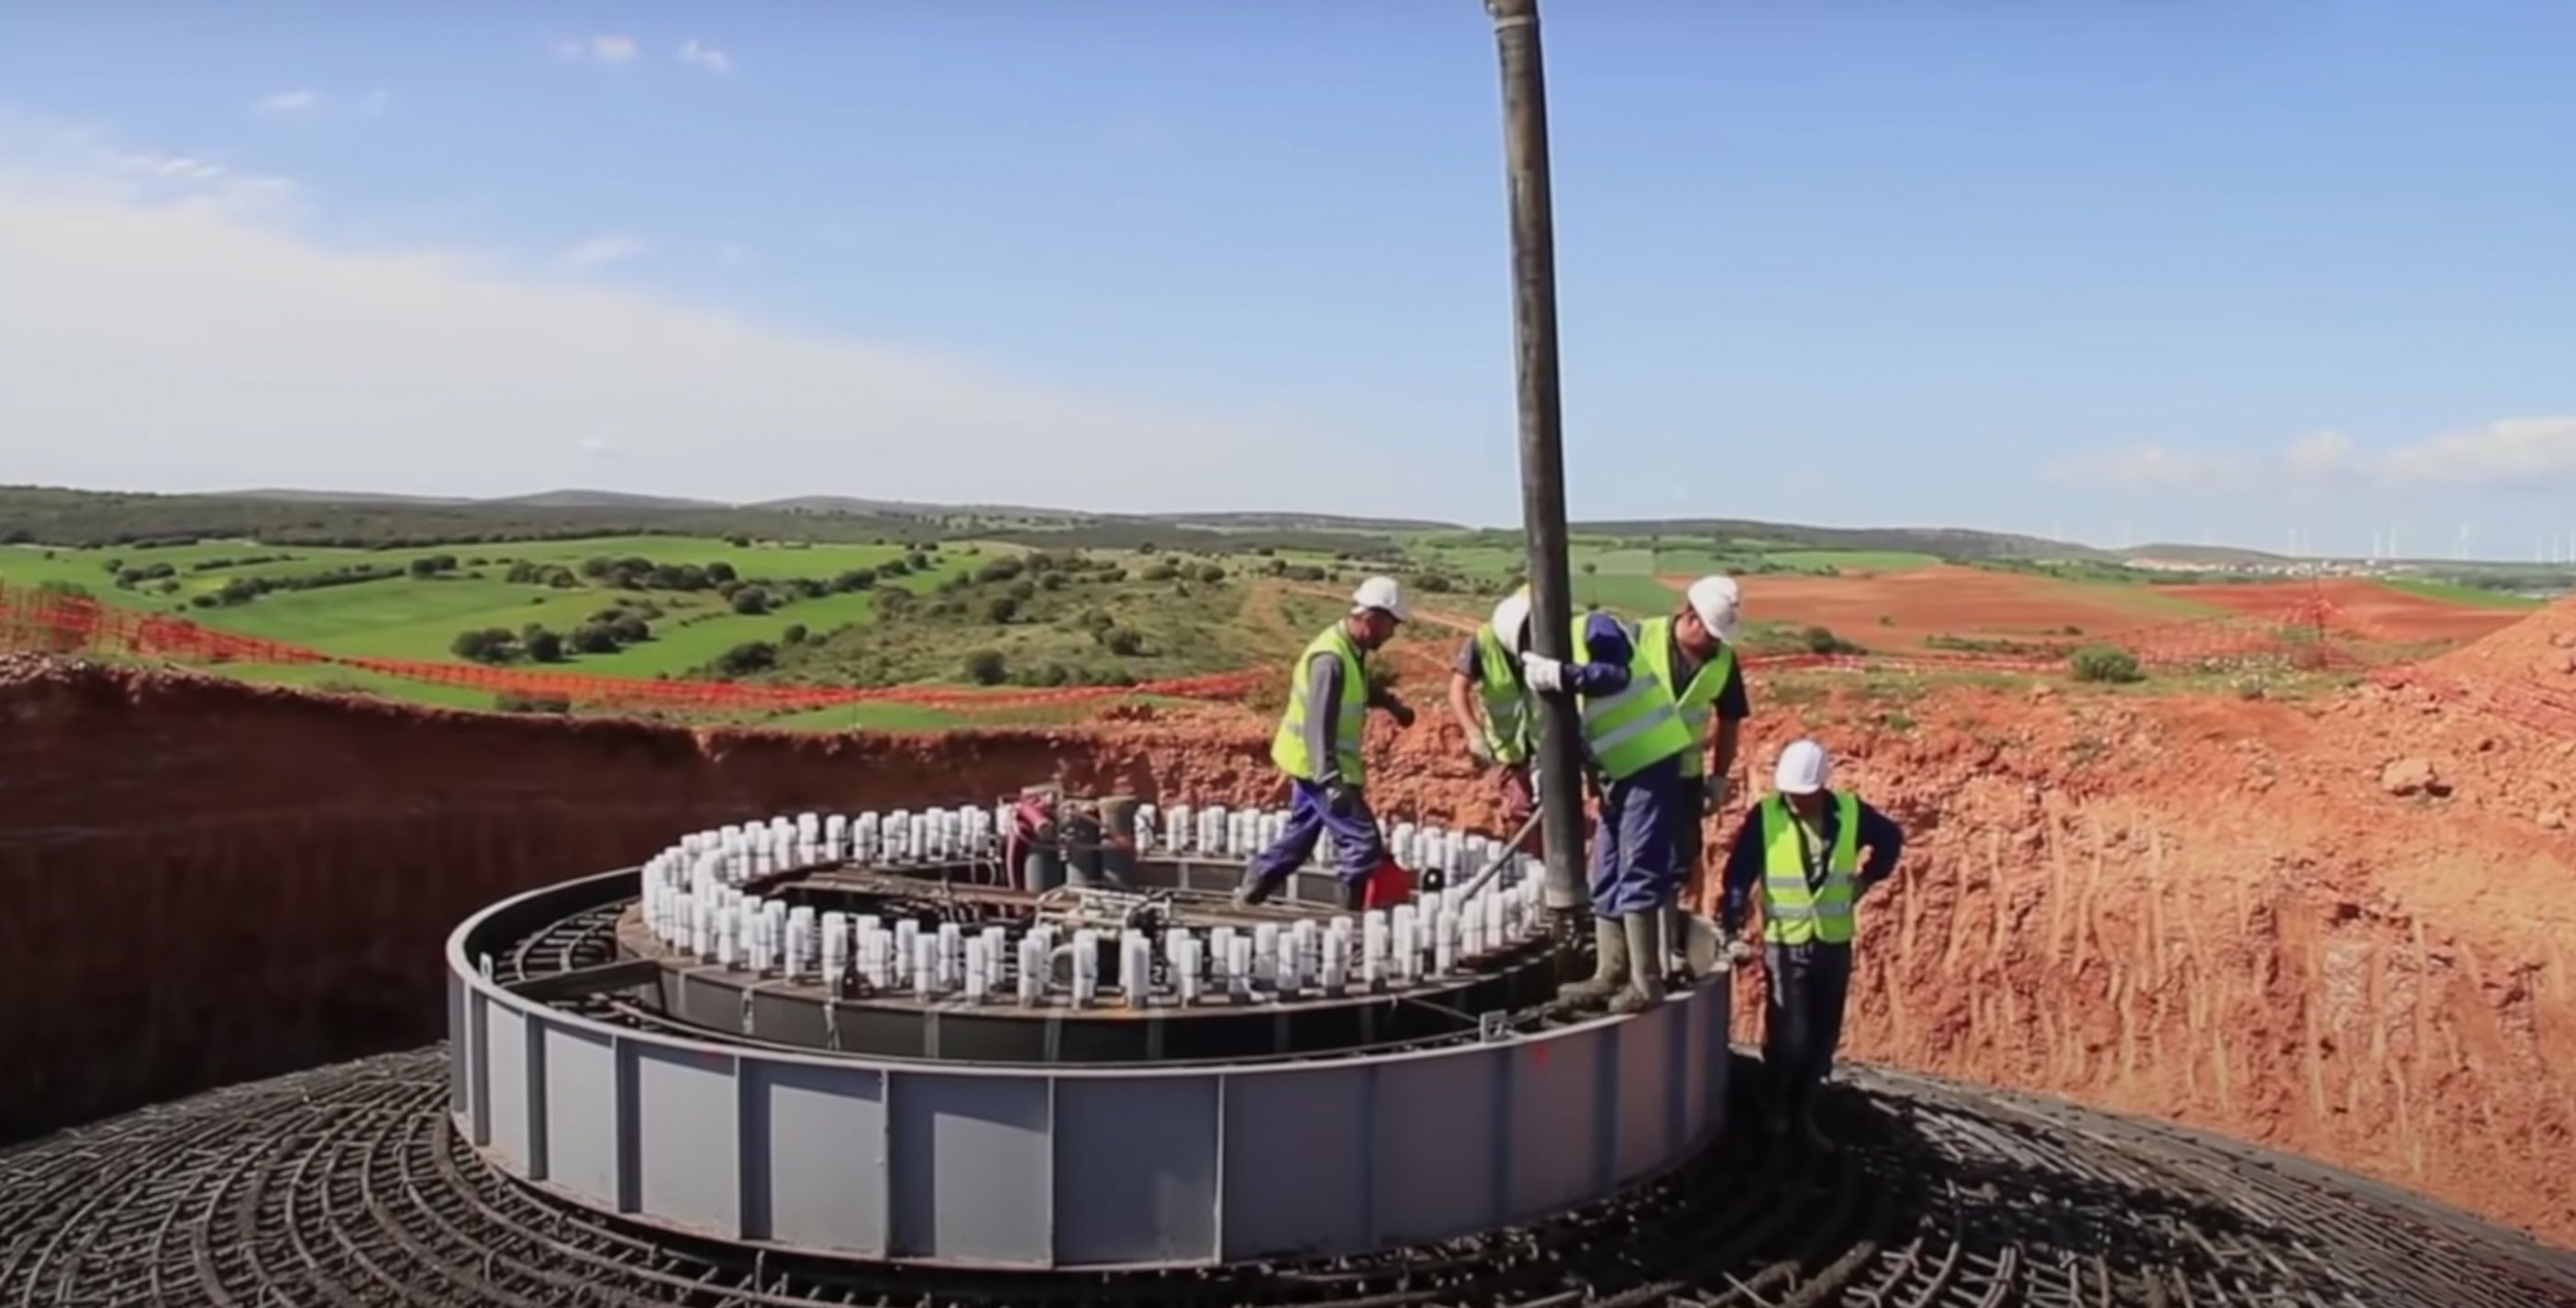 Watch Contractors Hypnotically Build an Entire Wind Turbine Farm